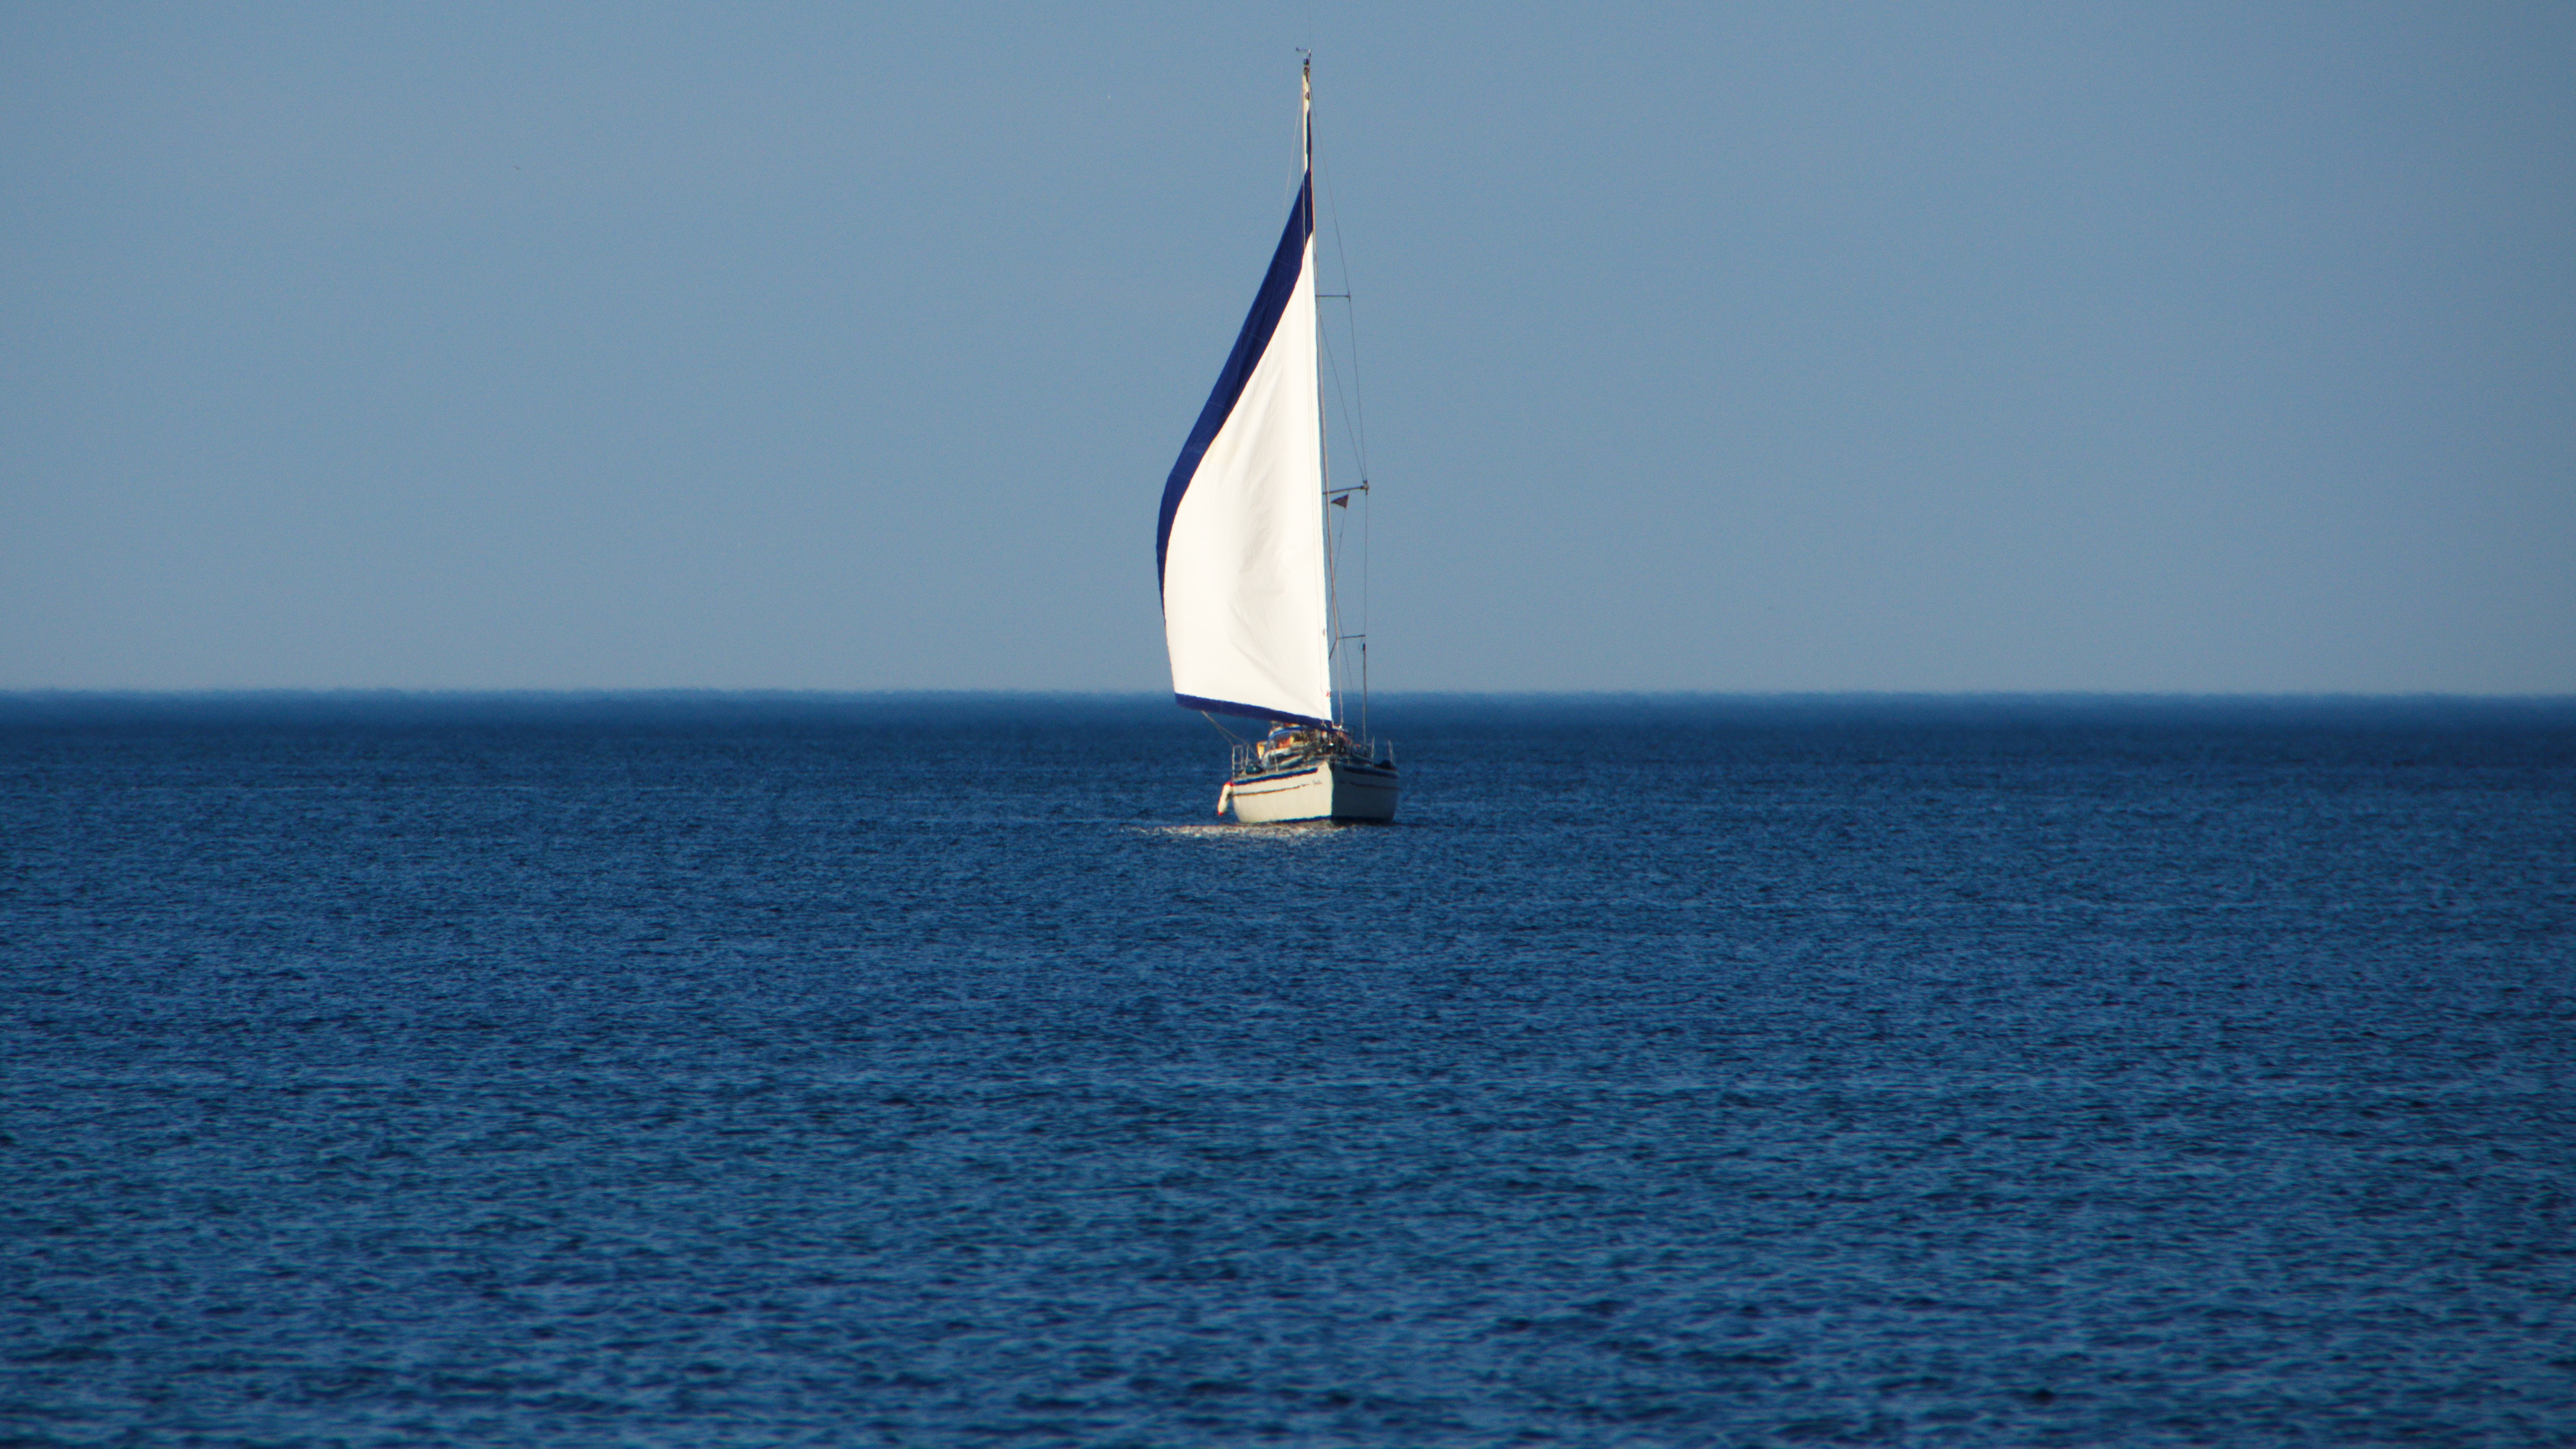 Sailing ship in the ocean photo